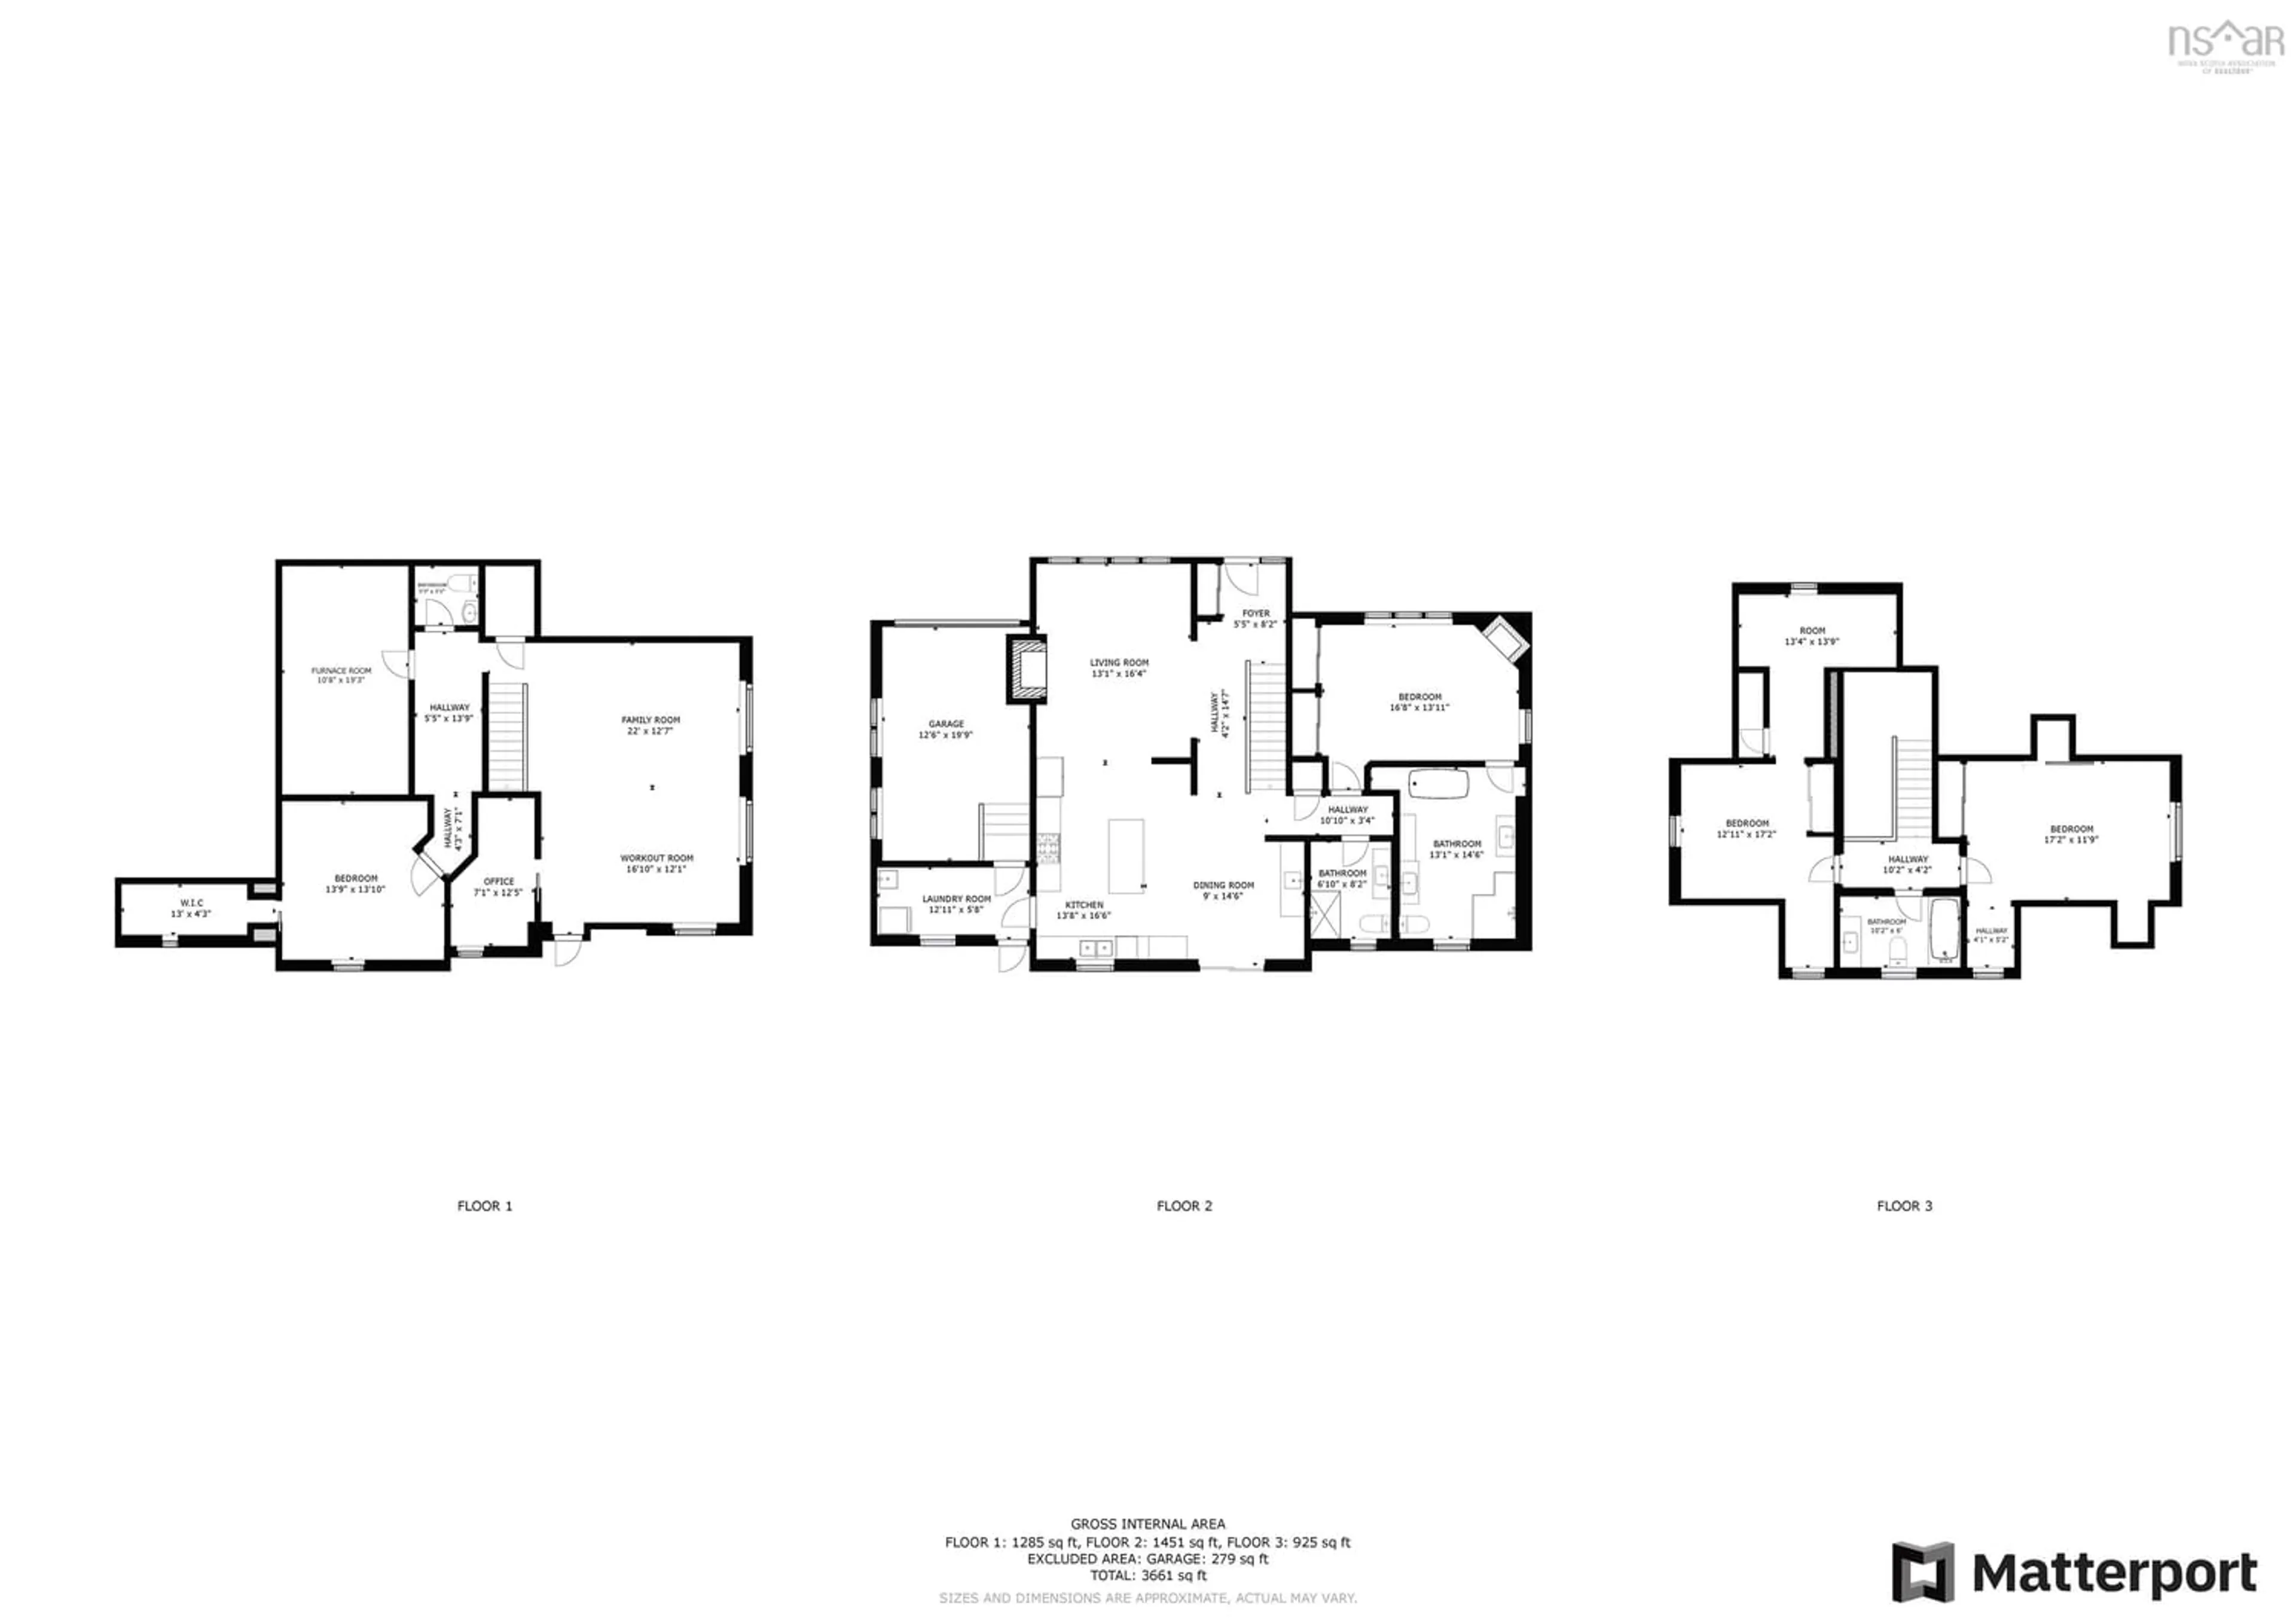 Floor plan for 34 White St, Dartmouth Nova Scotia B2X 2P5